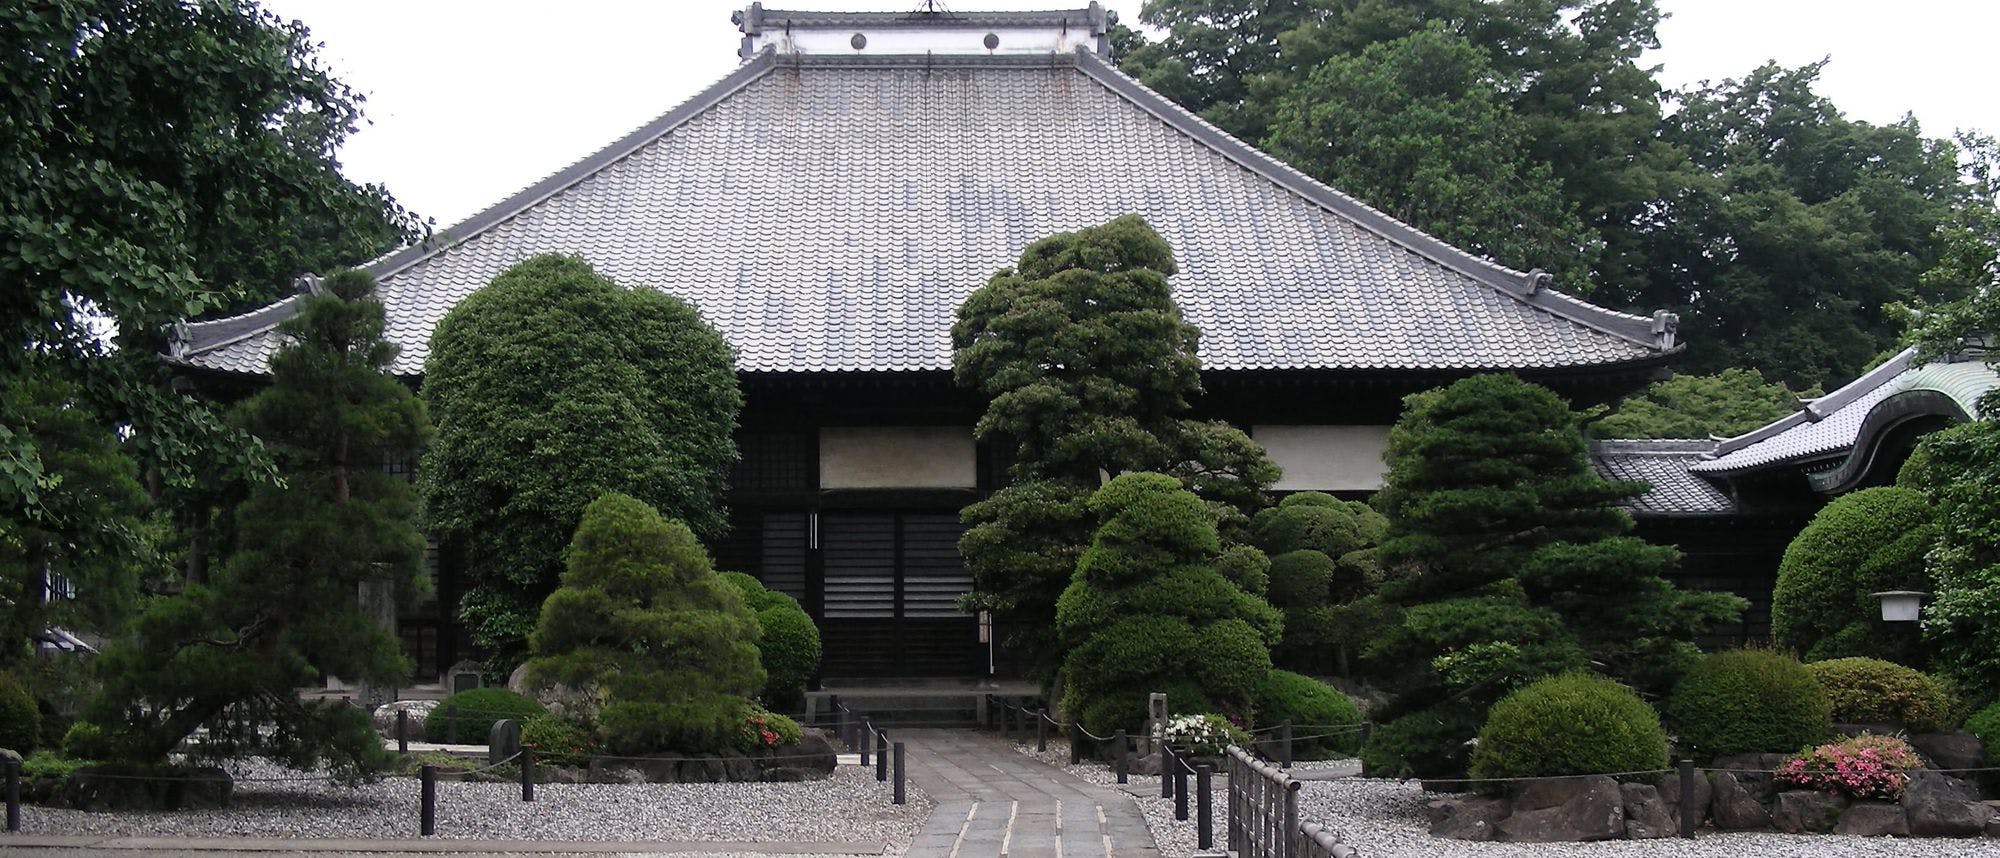 The Yojuin temple in Kawagoe, Saitama Prefecture